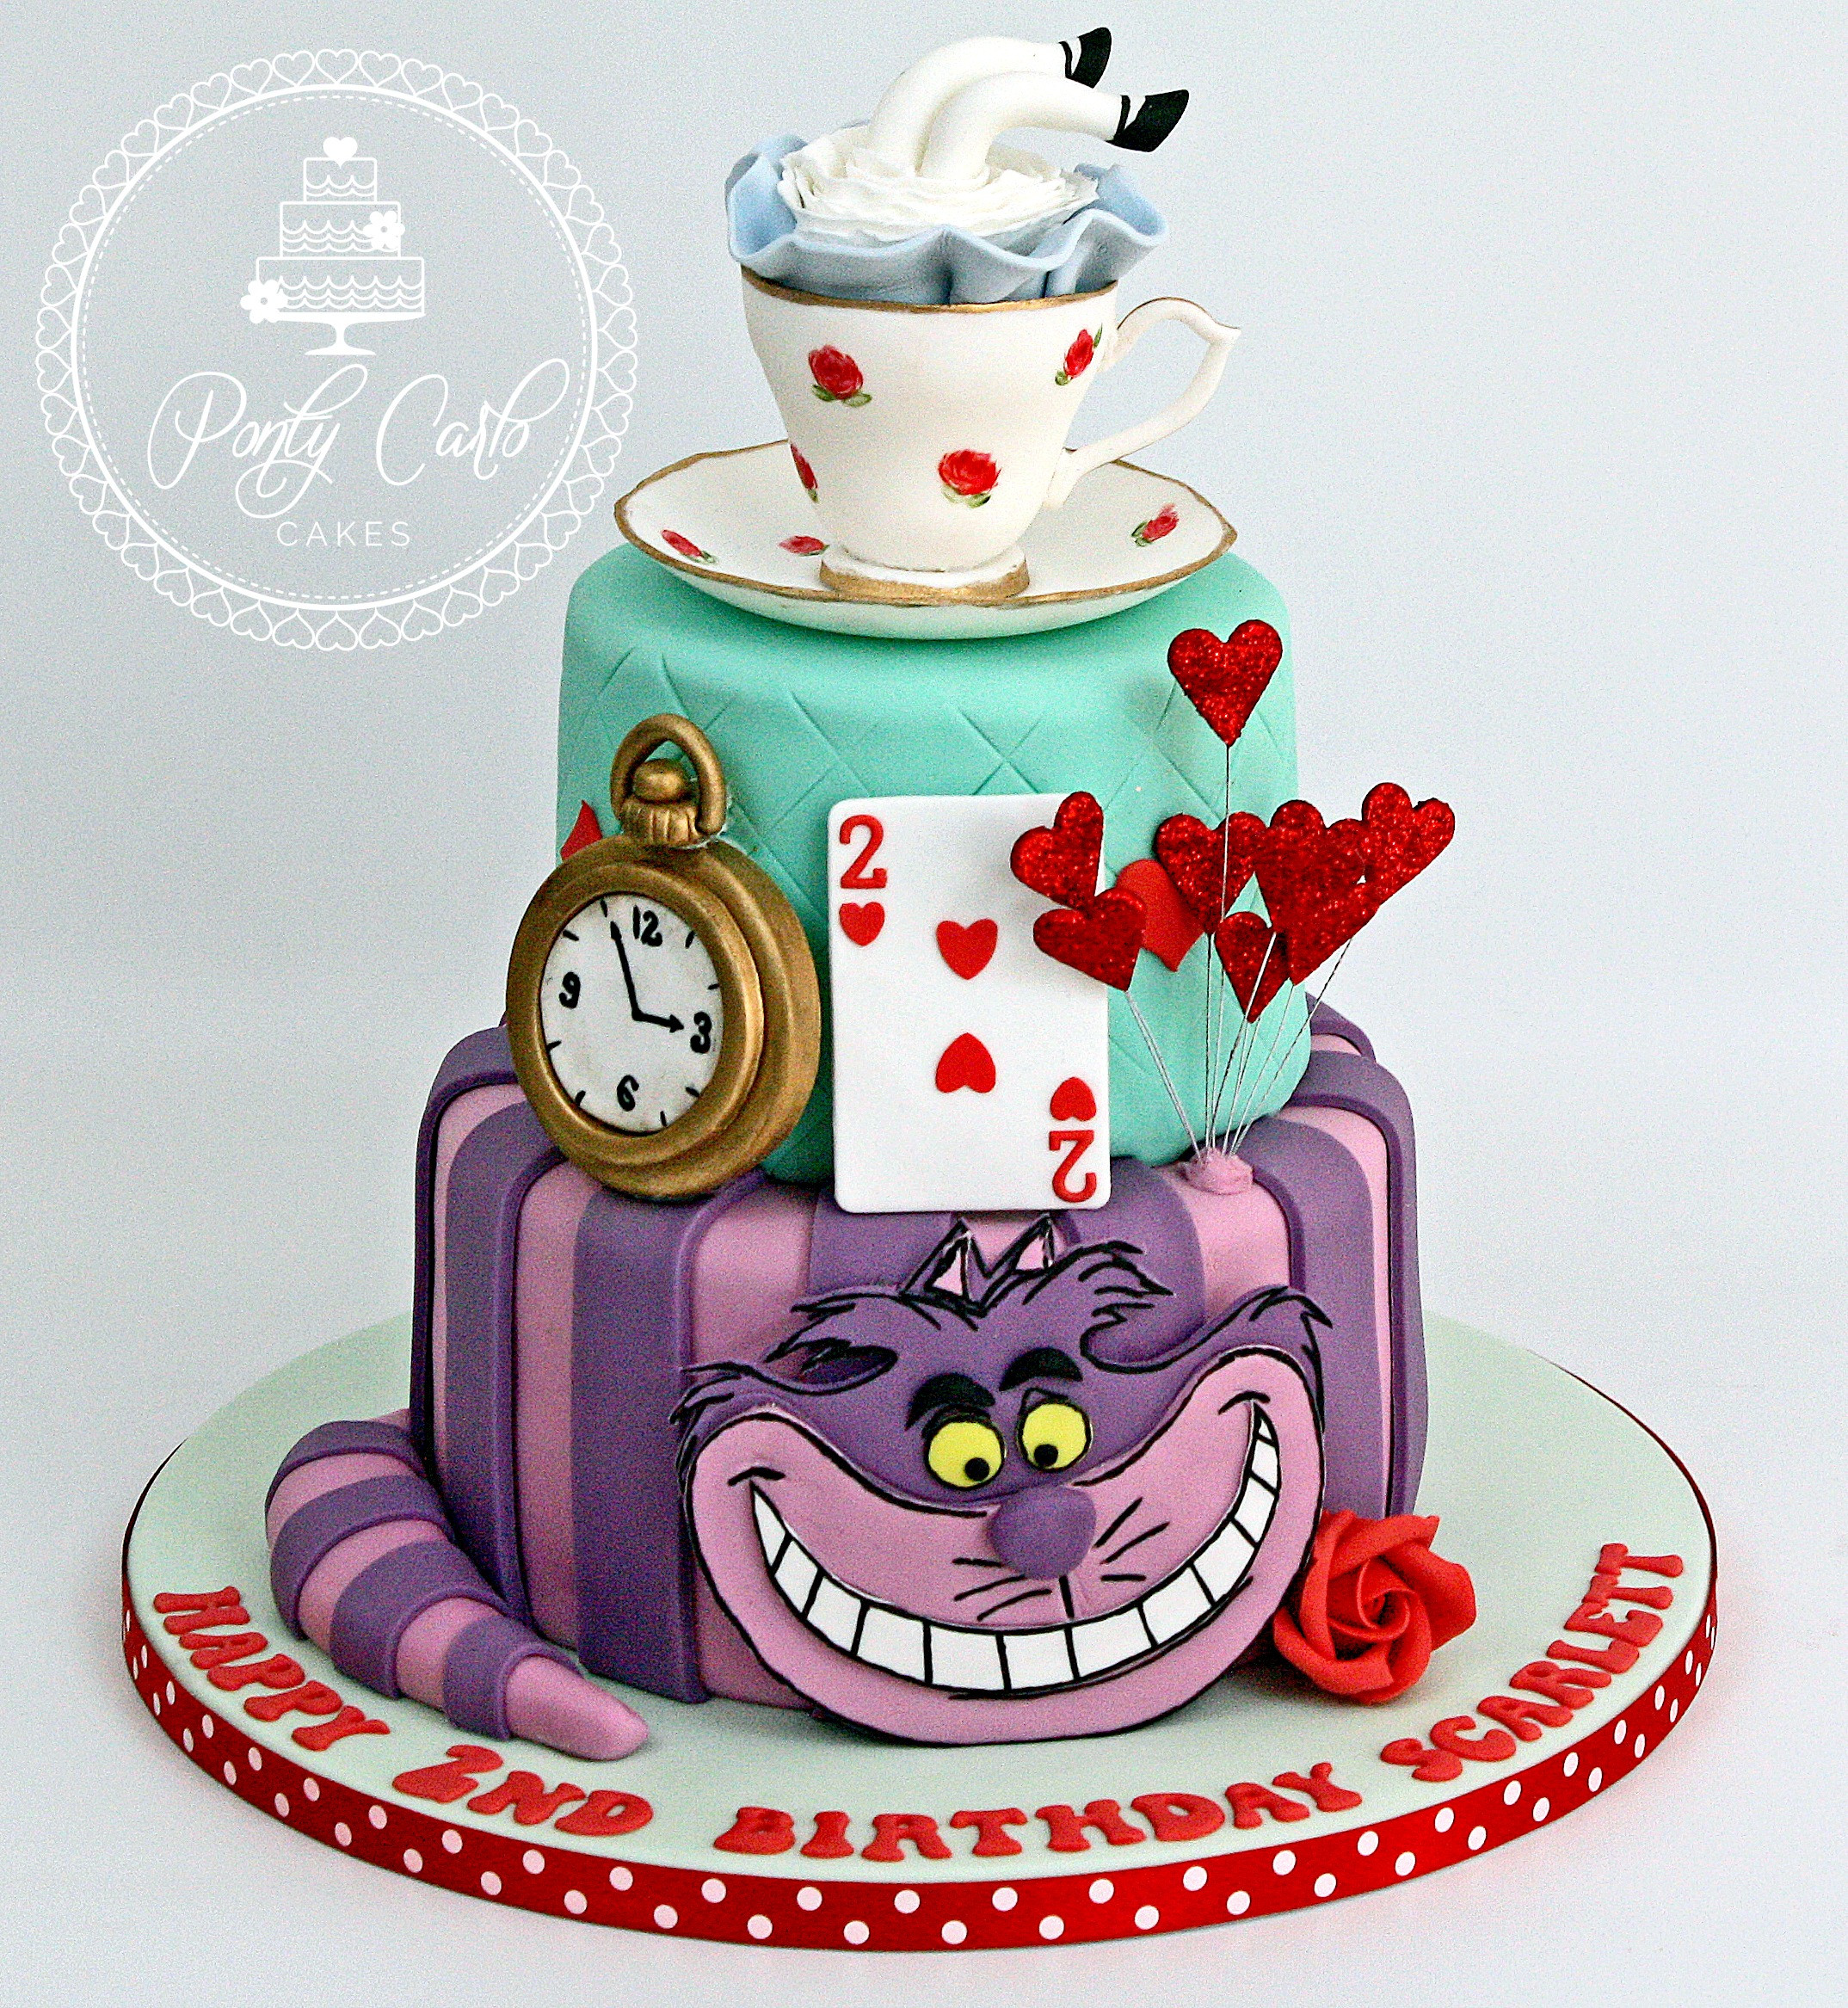 Alice In Wonderland Birthday Cake
 Ponty Carlo Cakes